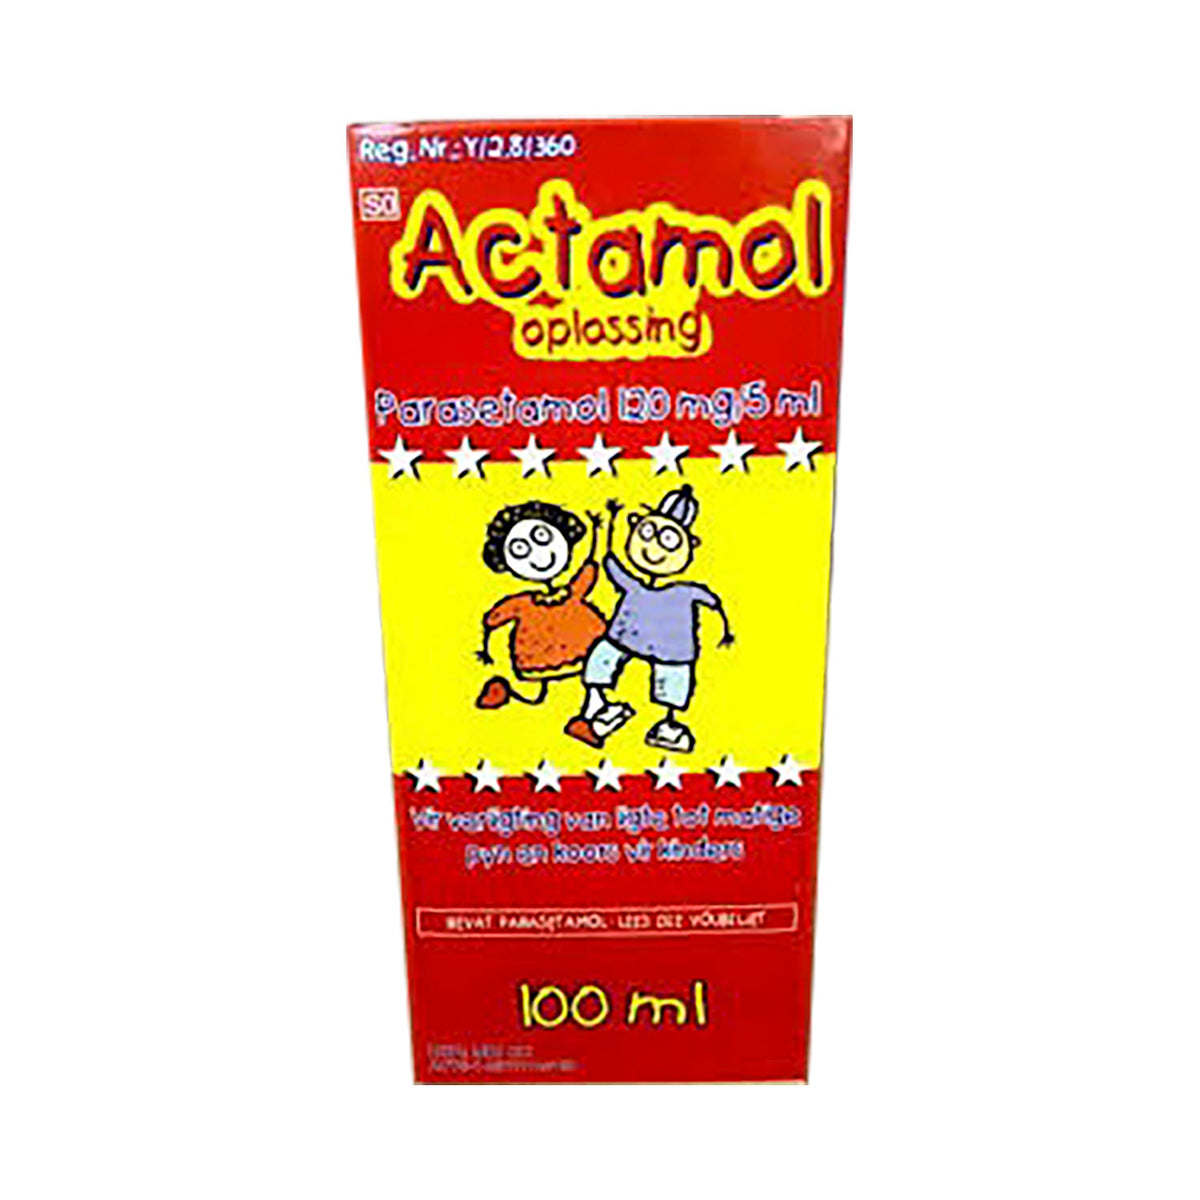 actamol